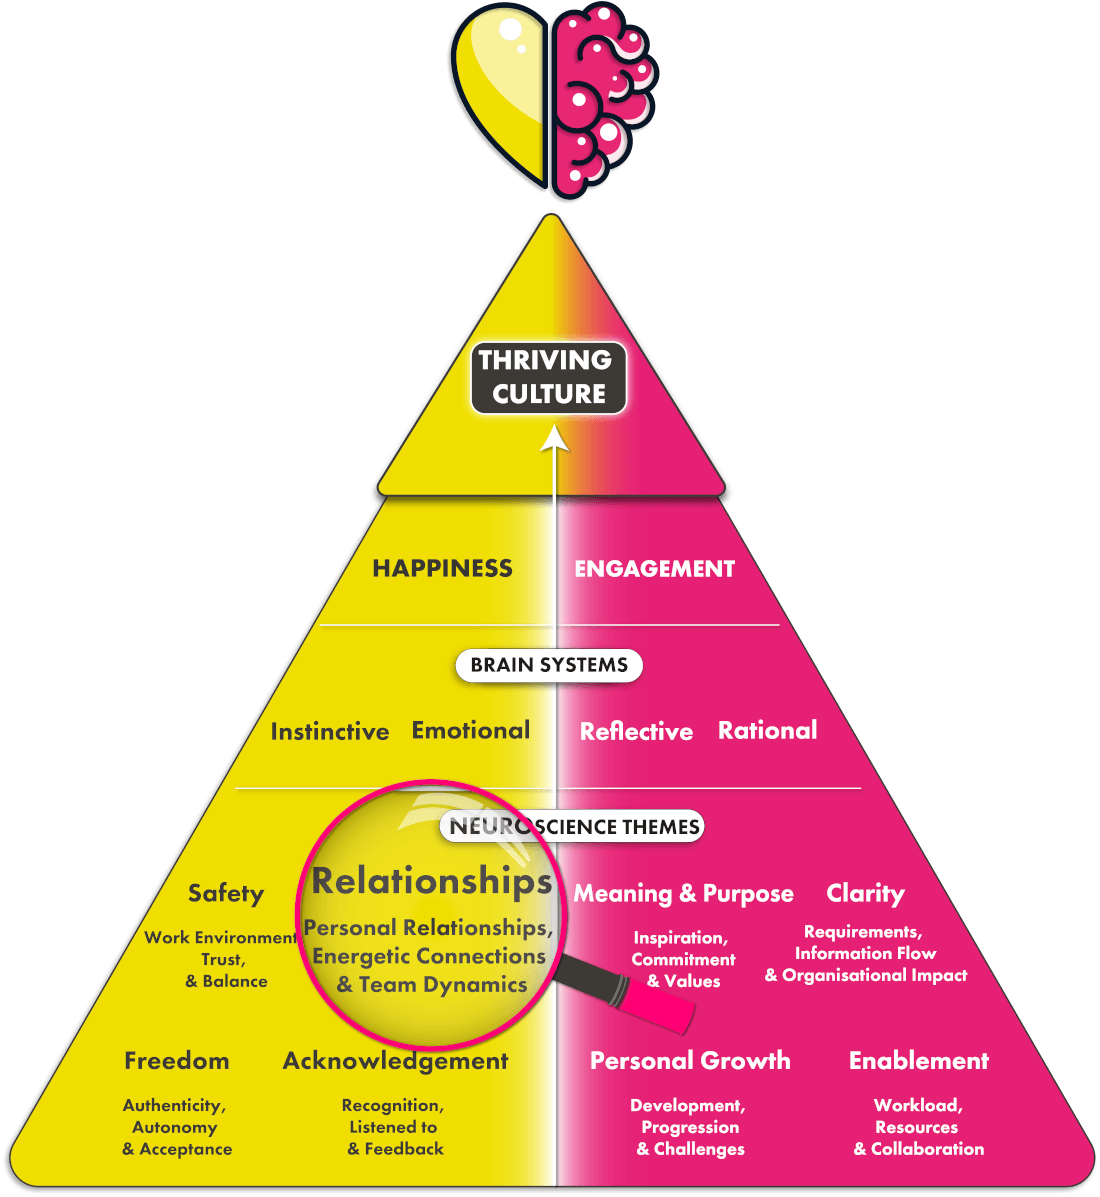 Relationships neuroscience theme on pyramid diagram